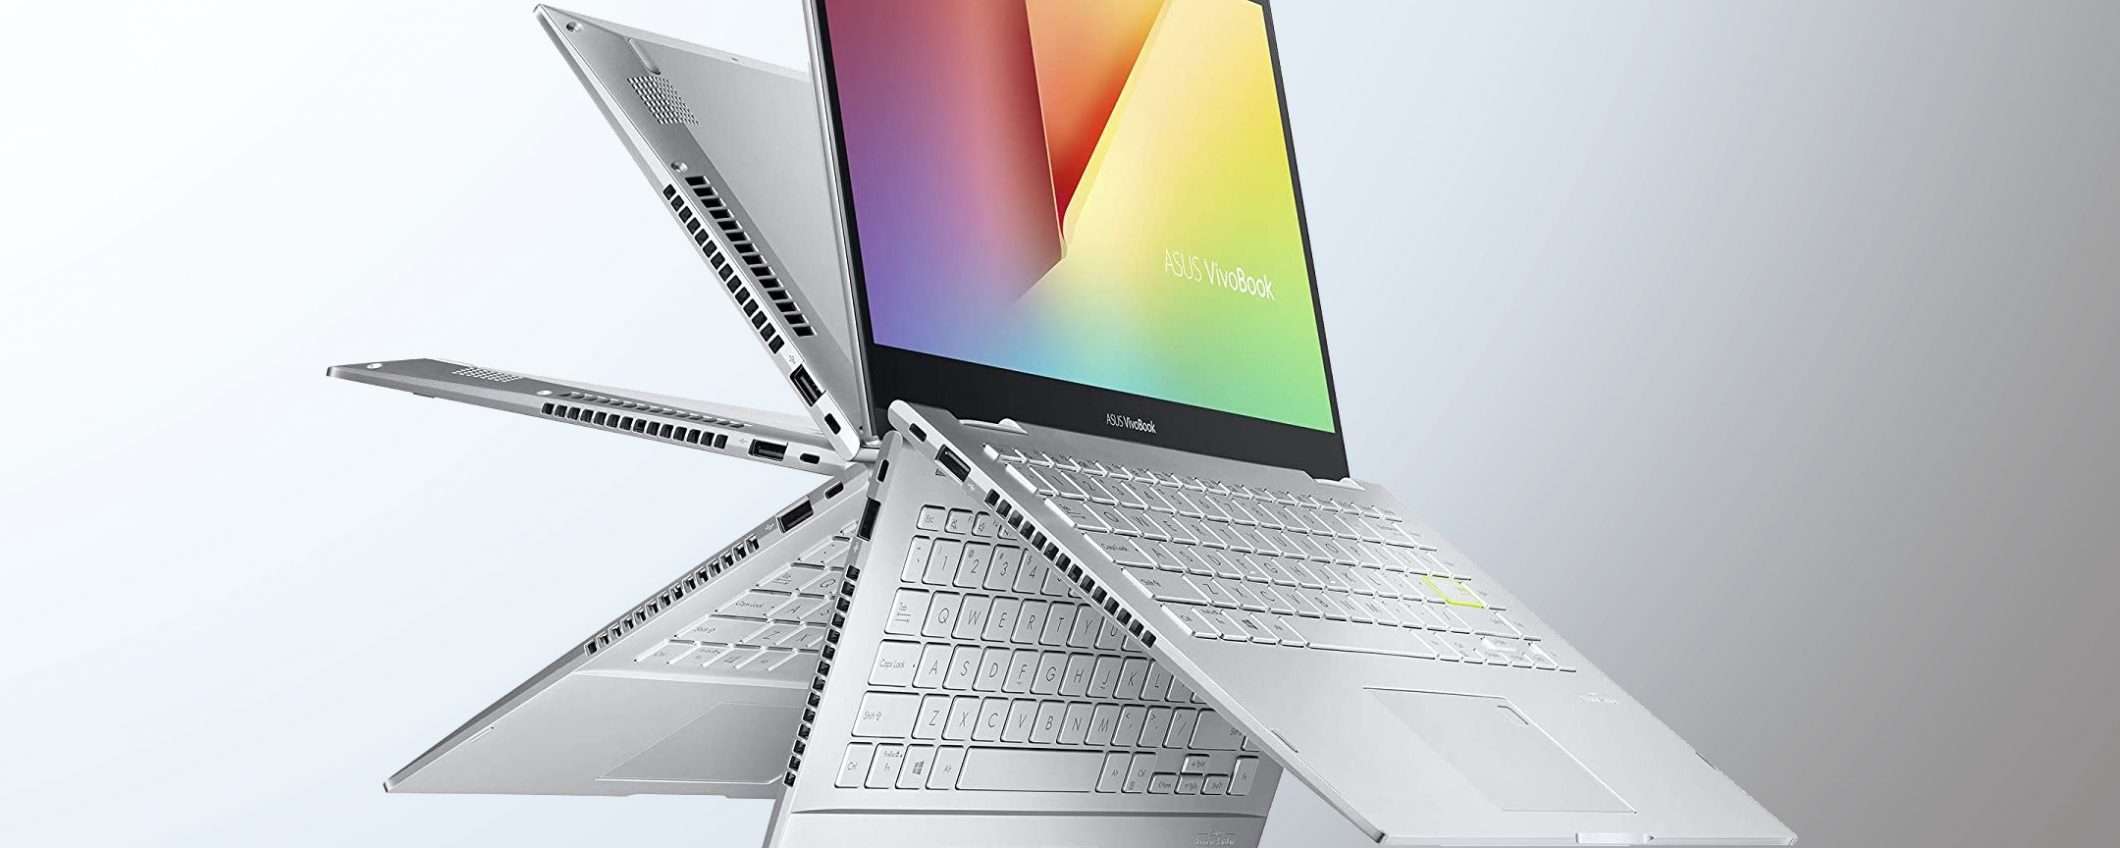 Asus, Huawei, Apple: le migliori offerte laptop di oggi